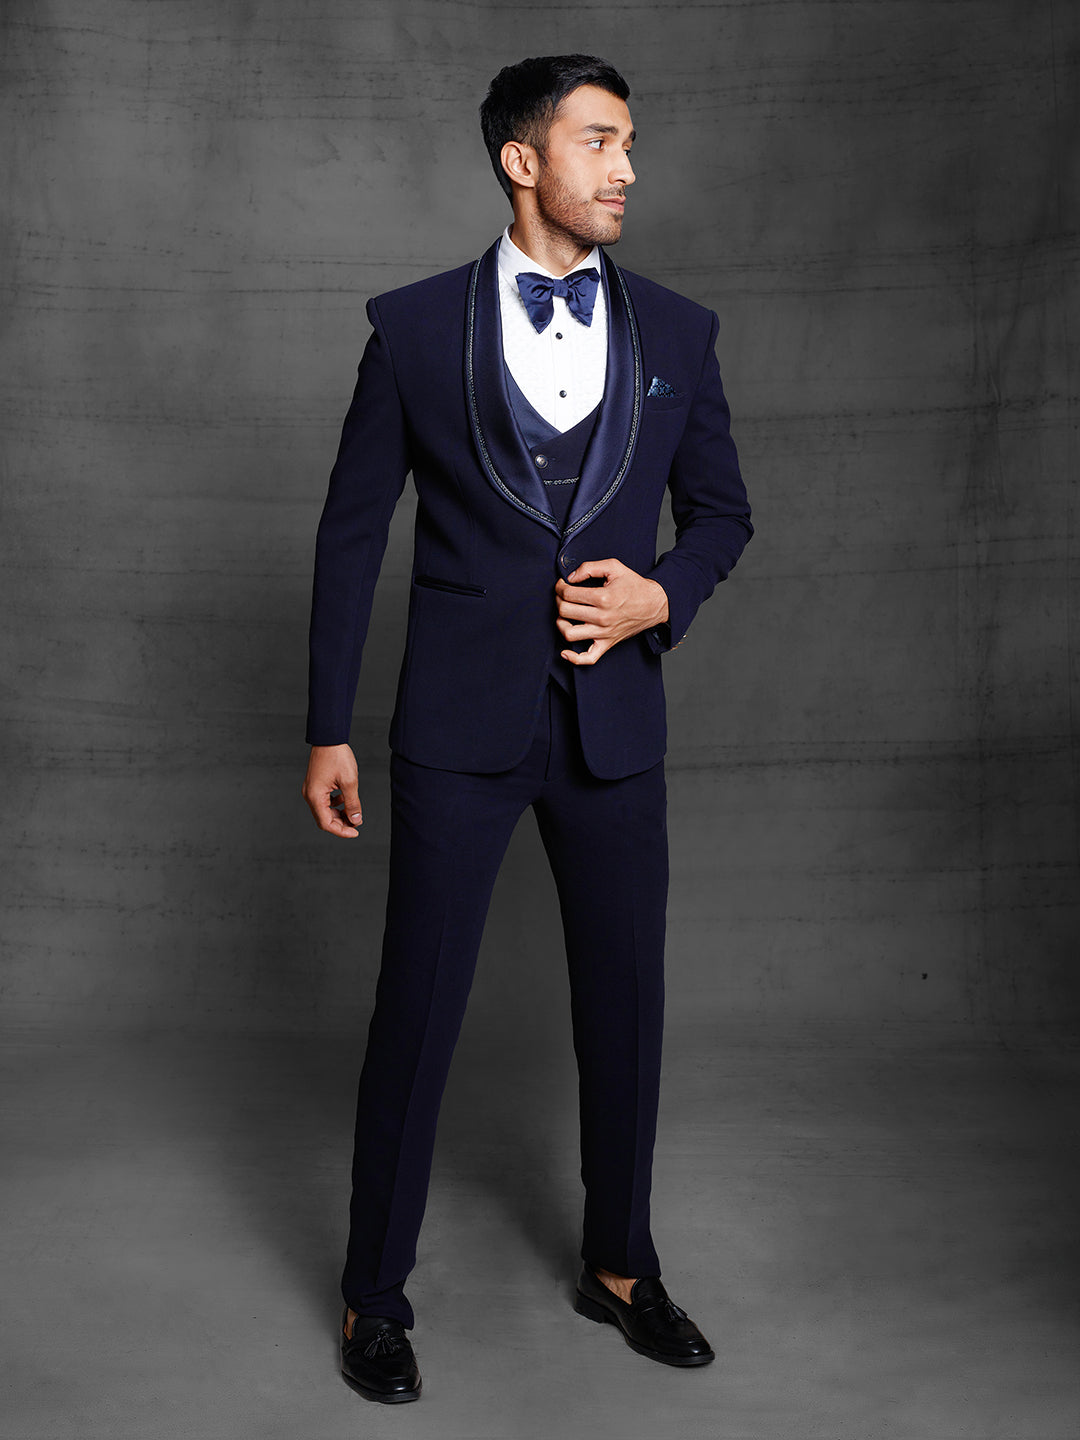 Blue tuxedo with waist coat